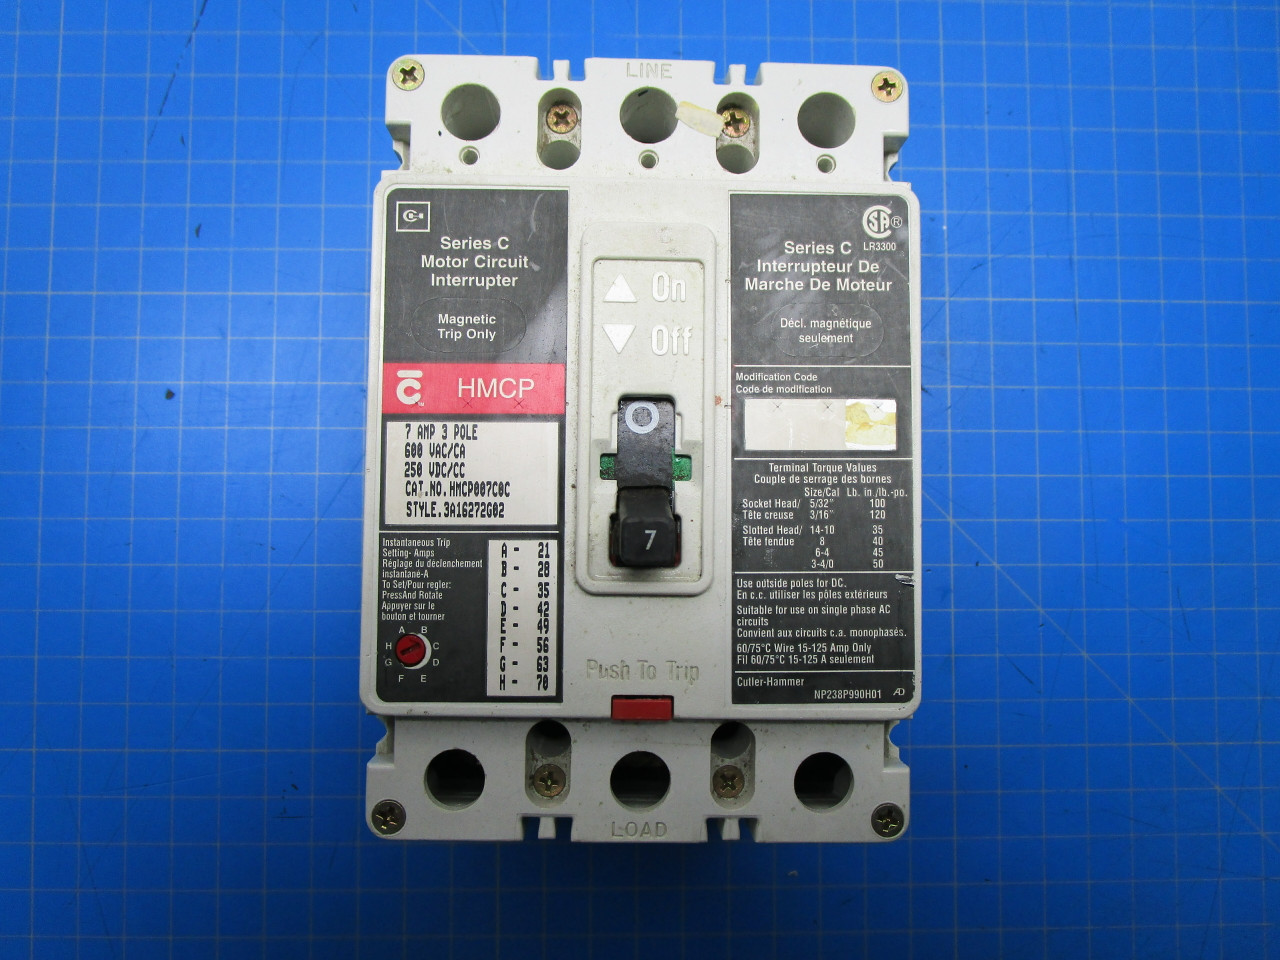 Cutler-Hammer Type HMCP 3 Pole 7 Amp 600 Volt Motor Circuit Interrupter Breaker Cat No. HMCP007C0C P02-000894